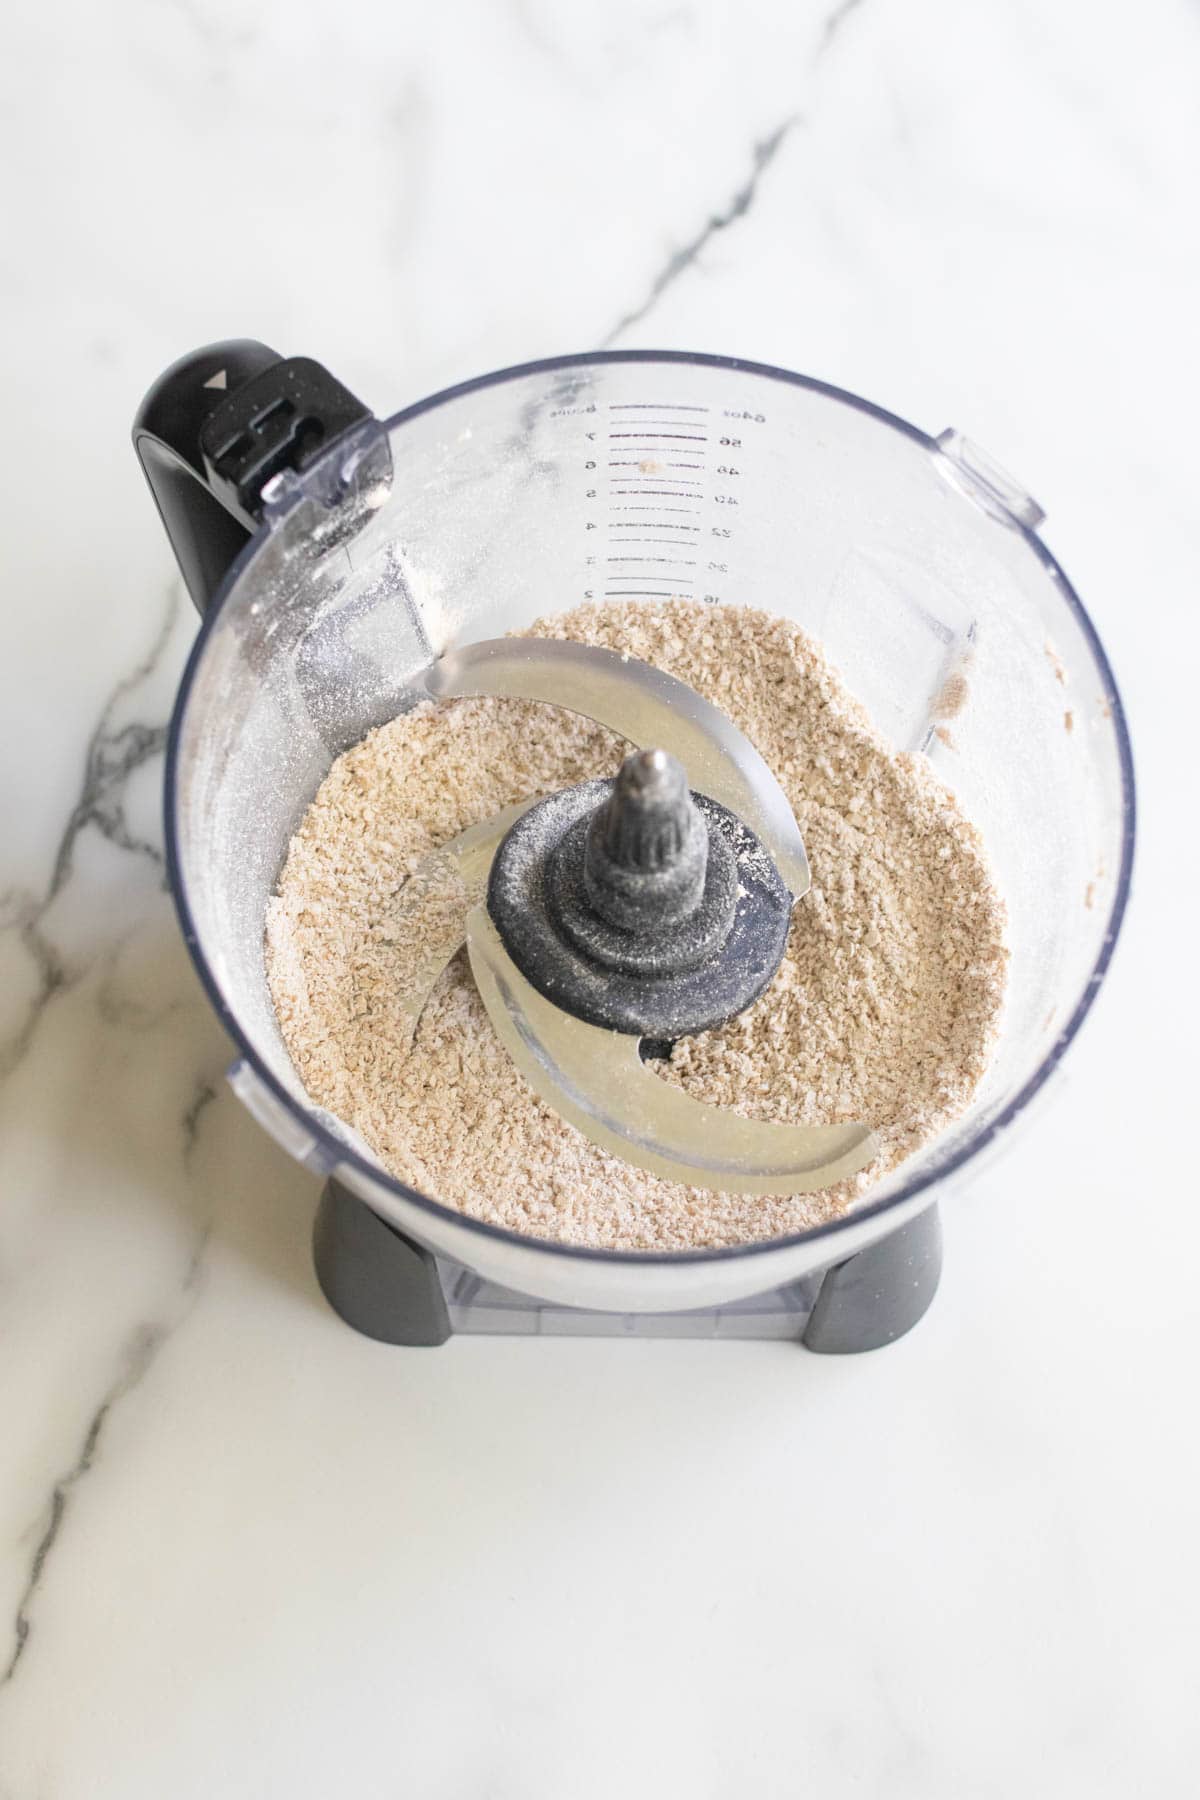 Blending oats in a food processor to make oat flour.